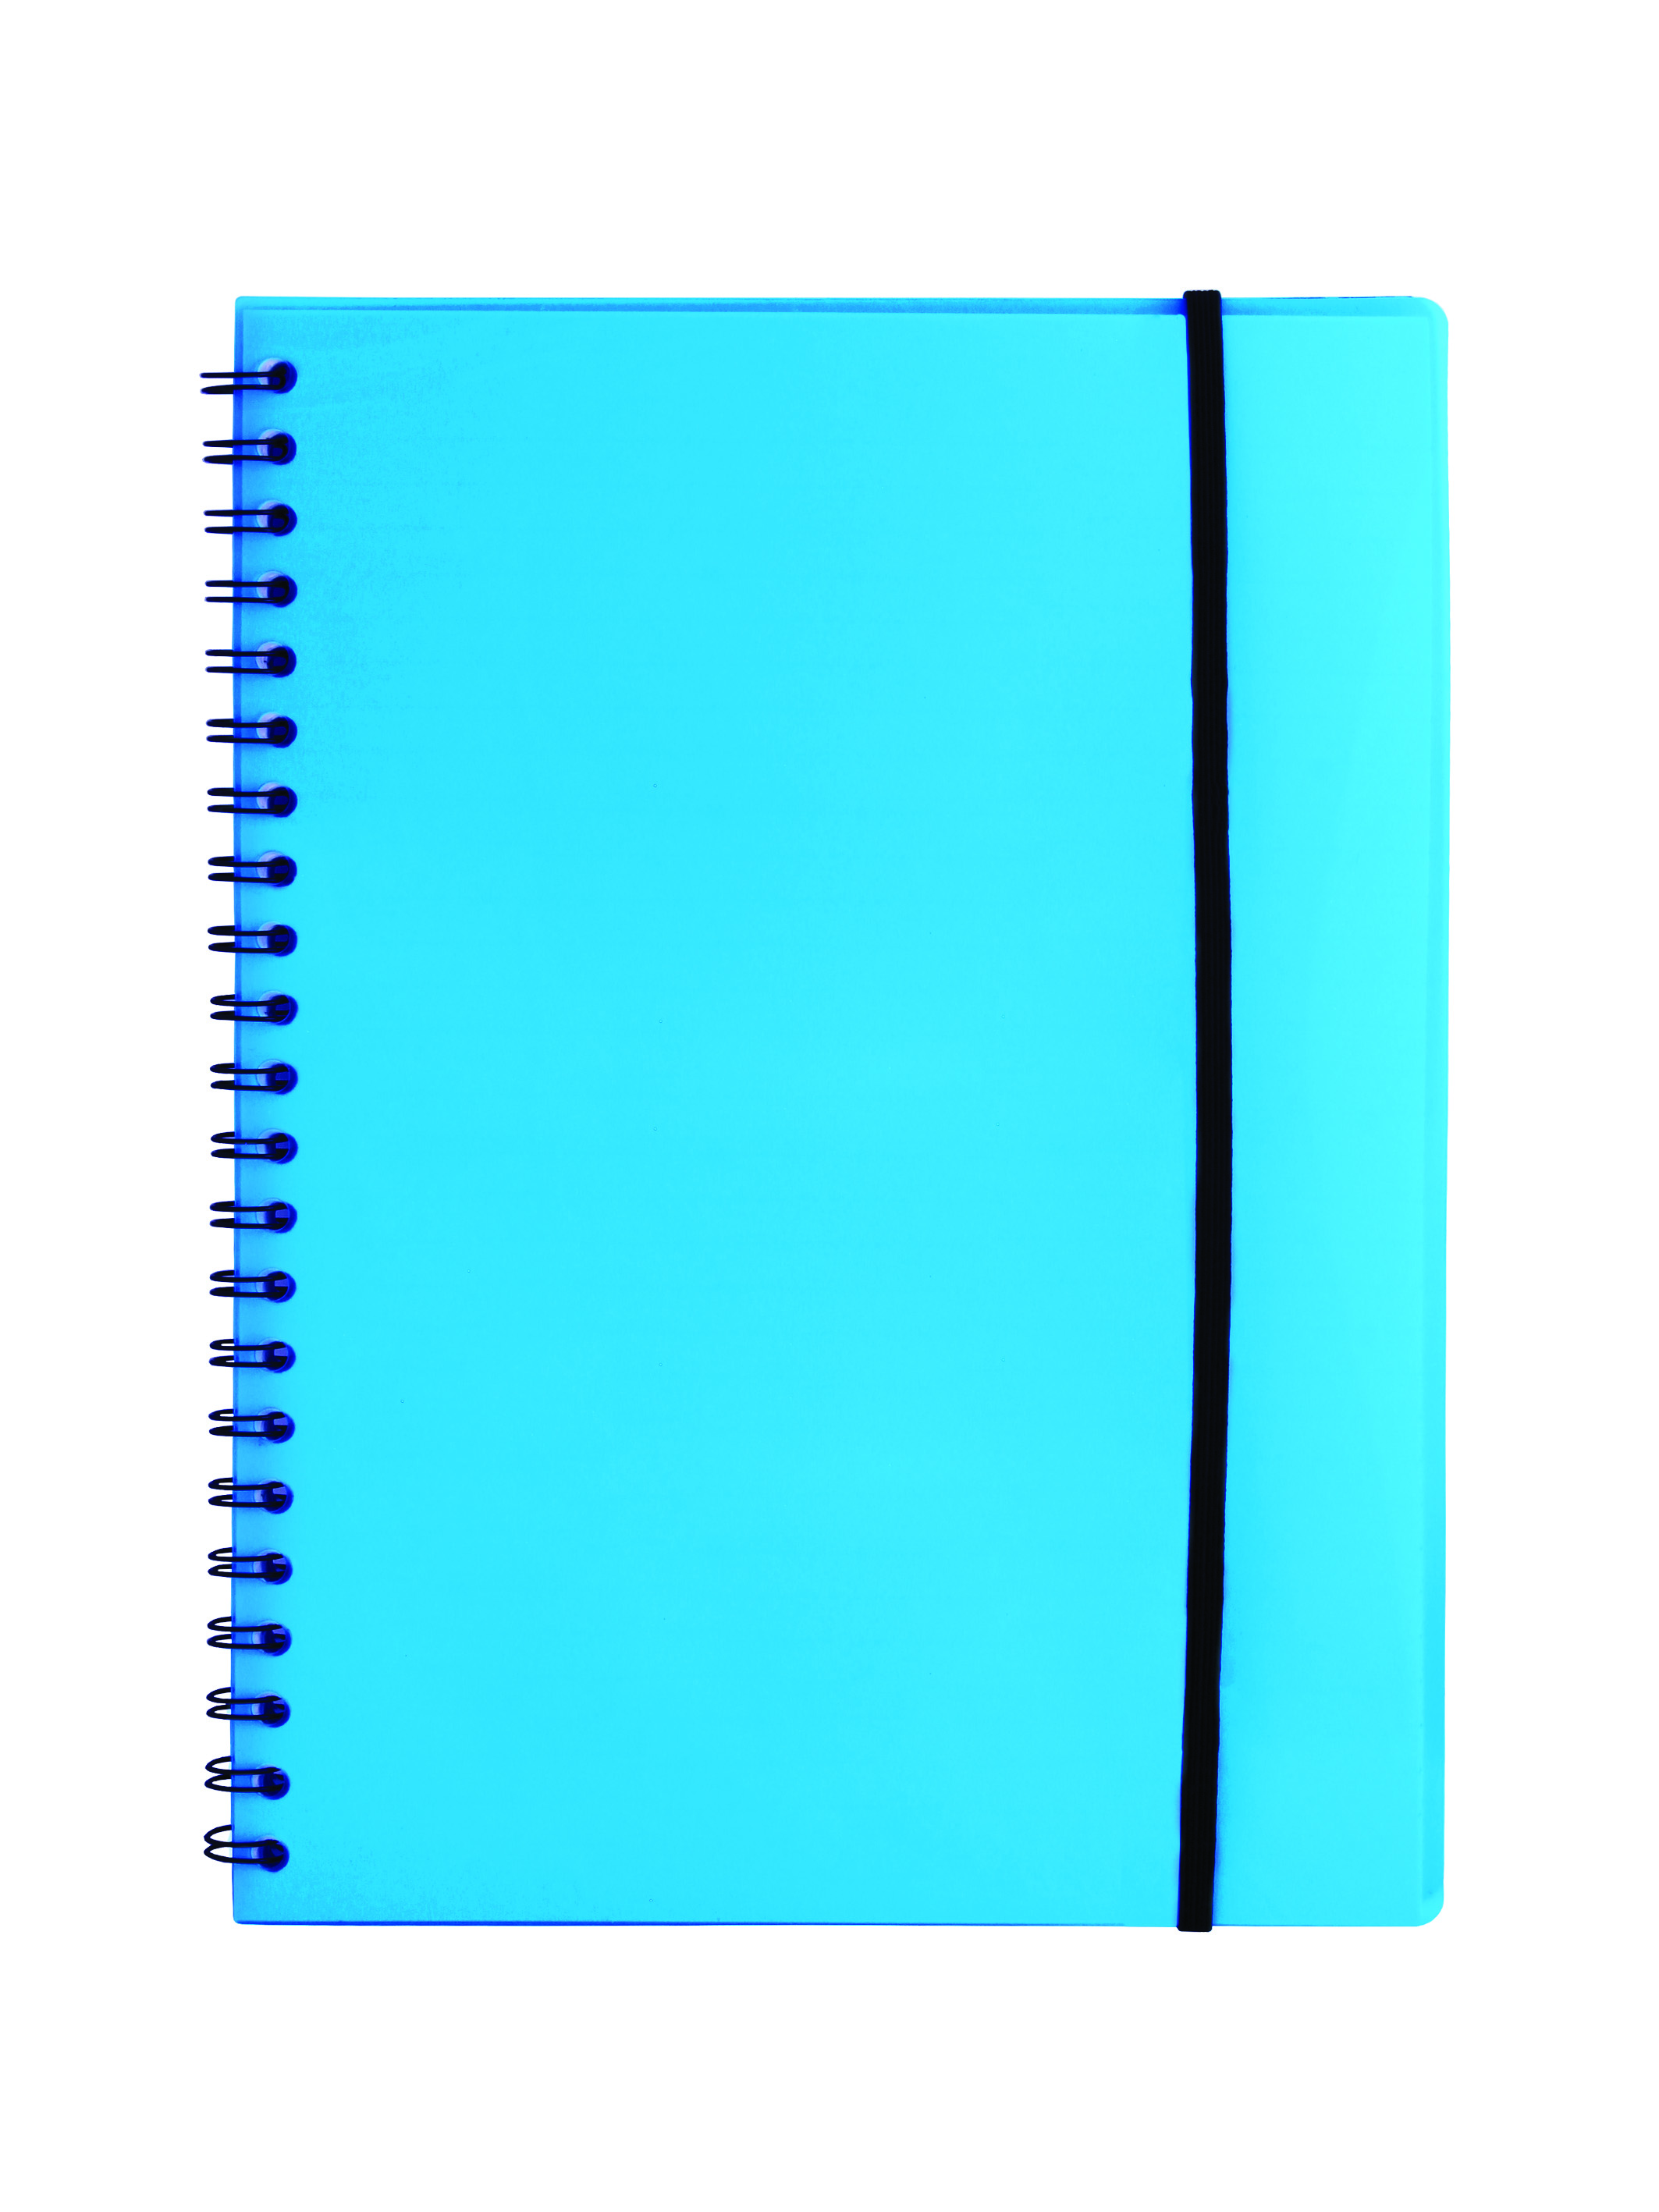 Notesbog A4 plast med spiralryg blå